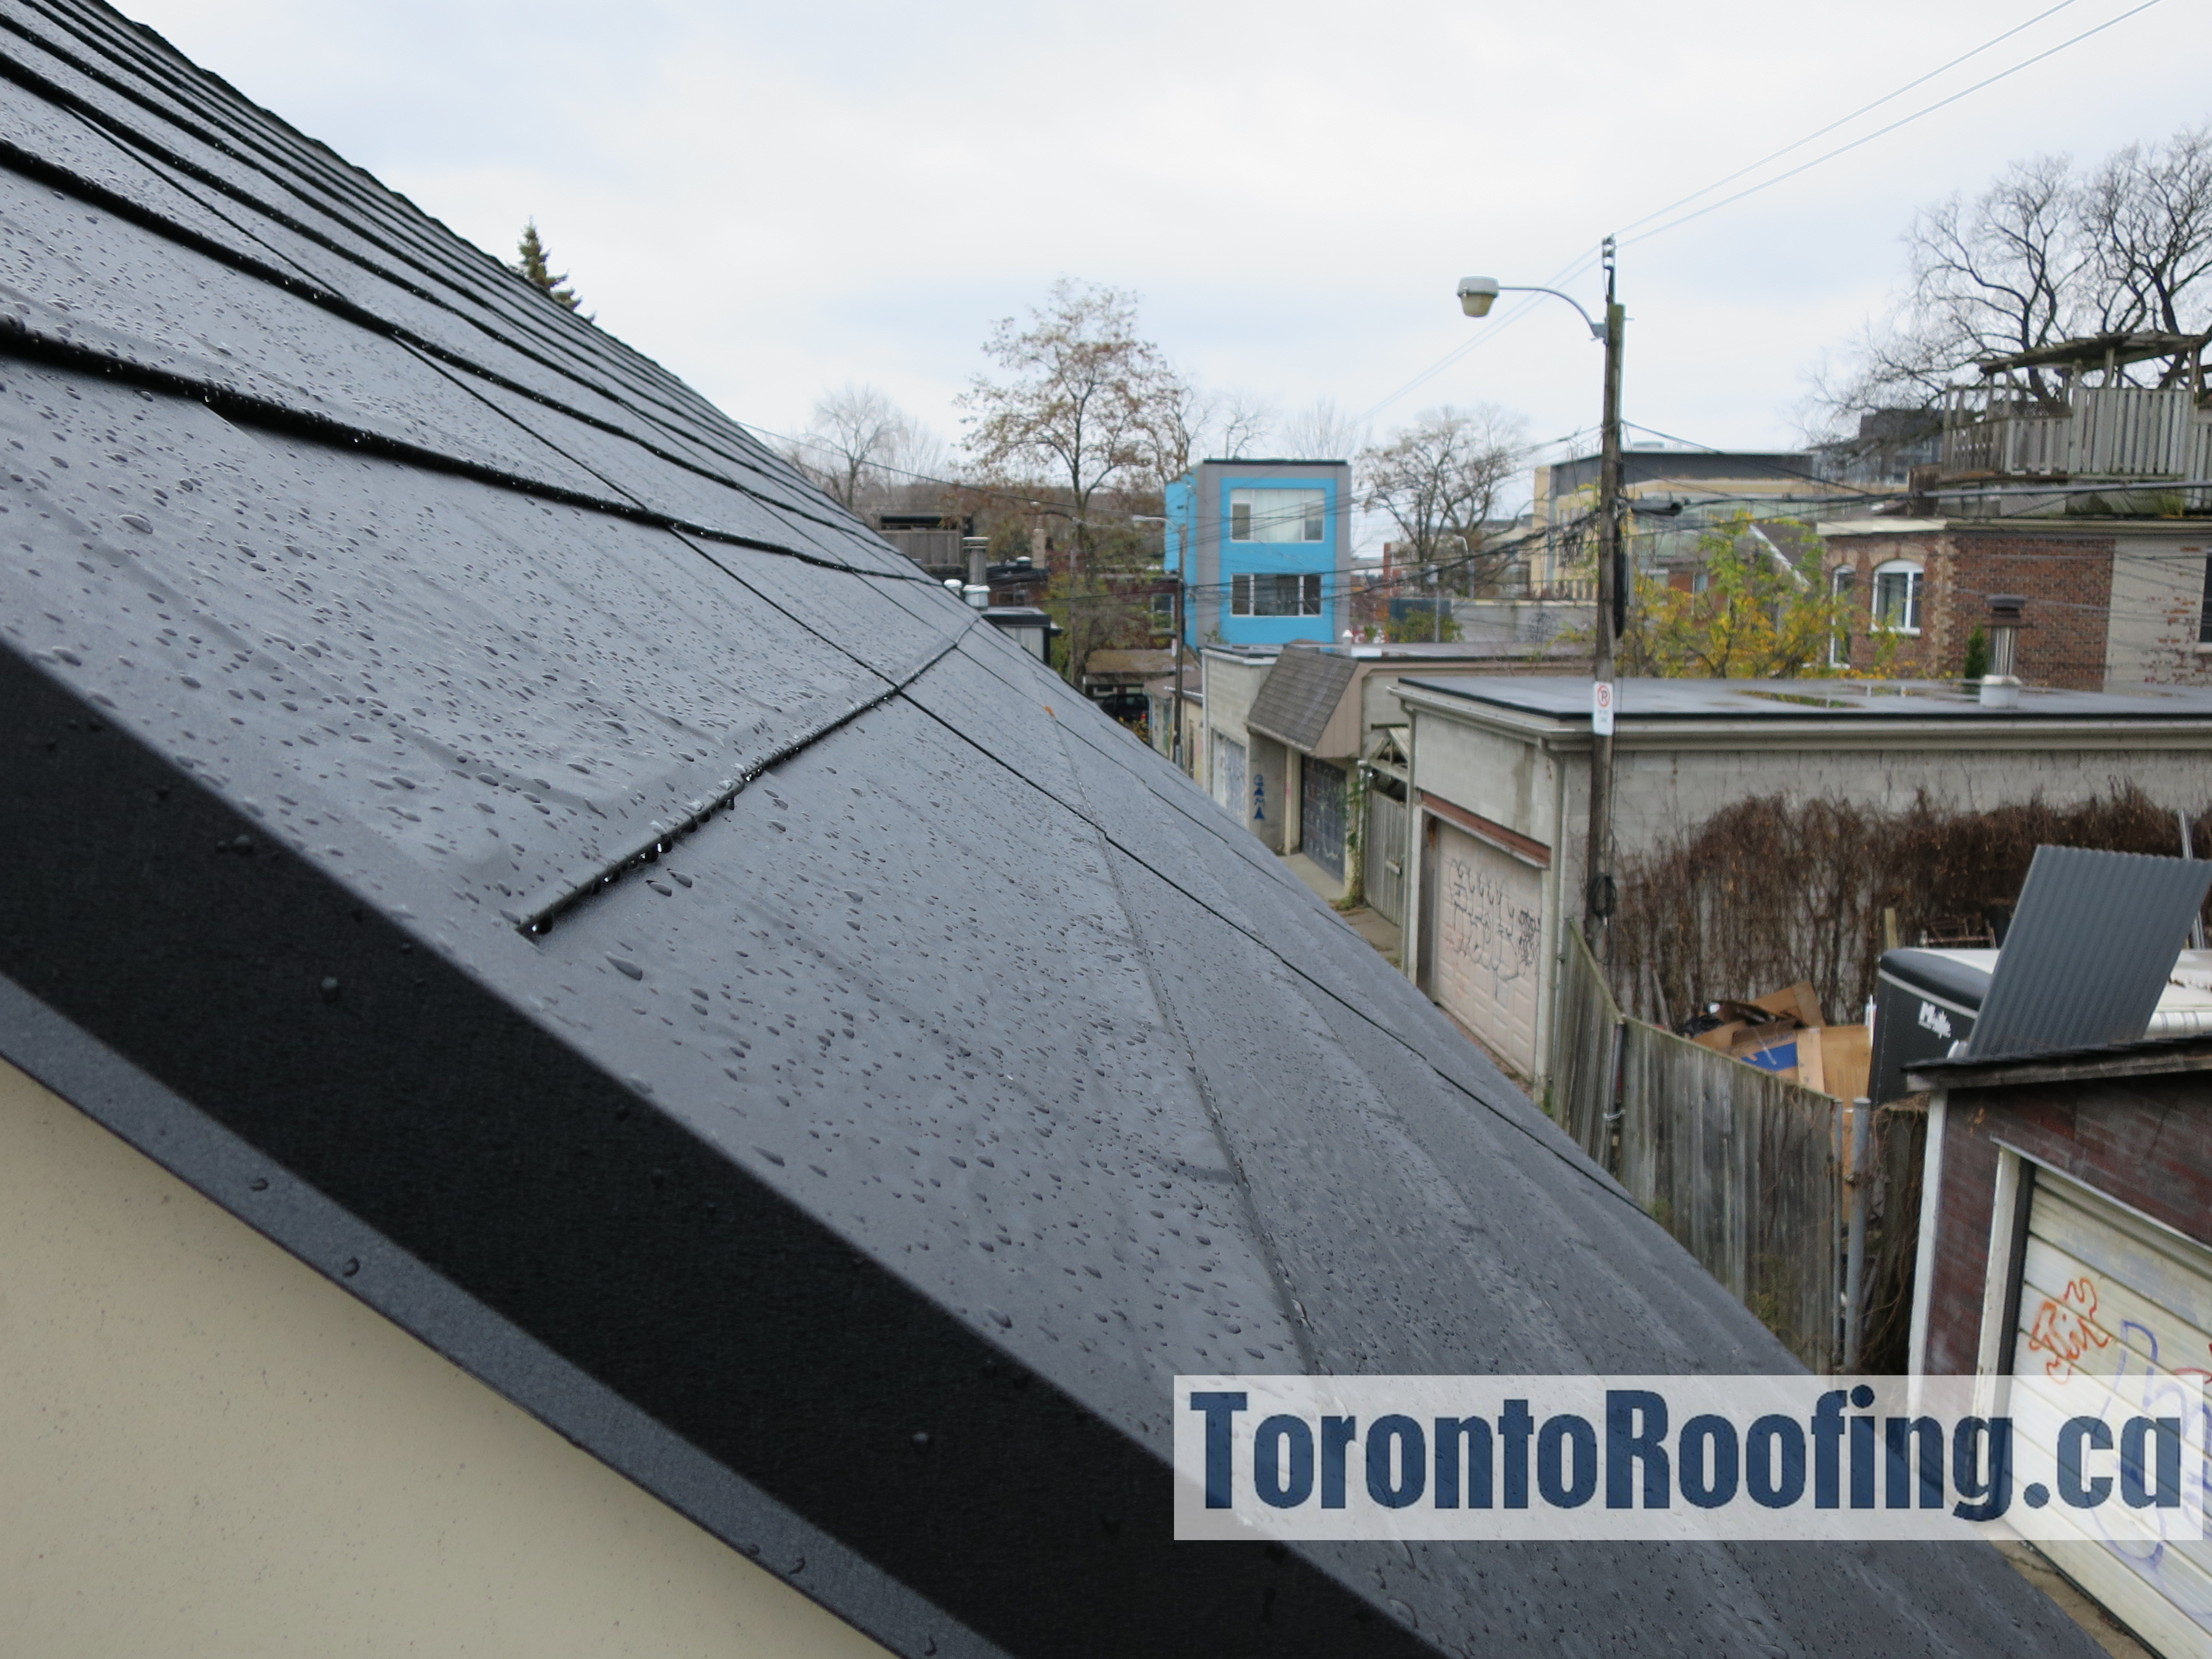 Toronto,roofing,metal,shingles,contractor,roof,installation,asphalt,shake,slate,steel,replacement